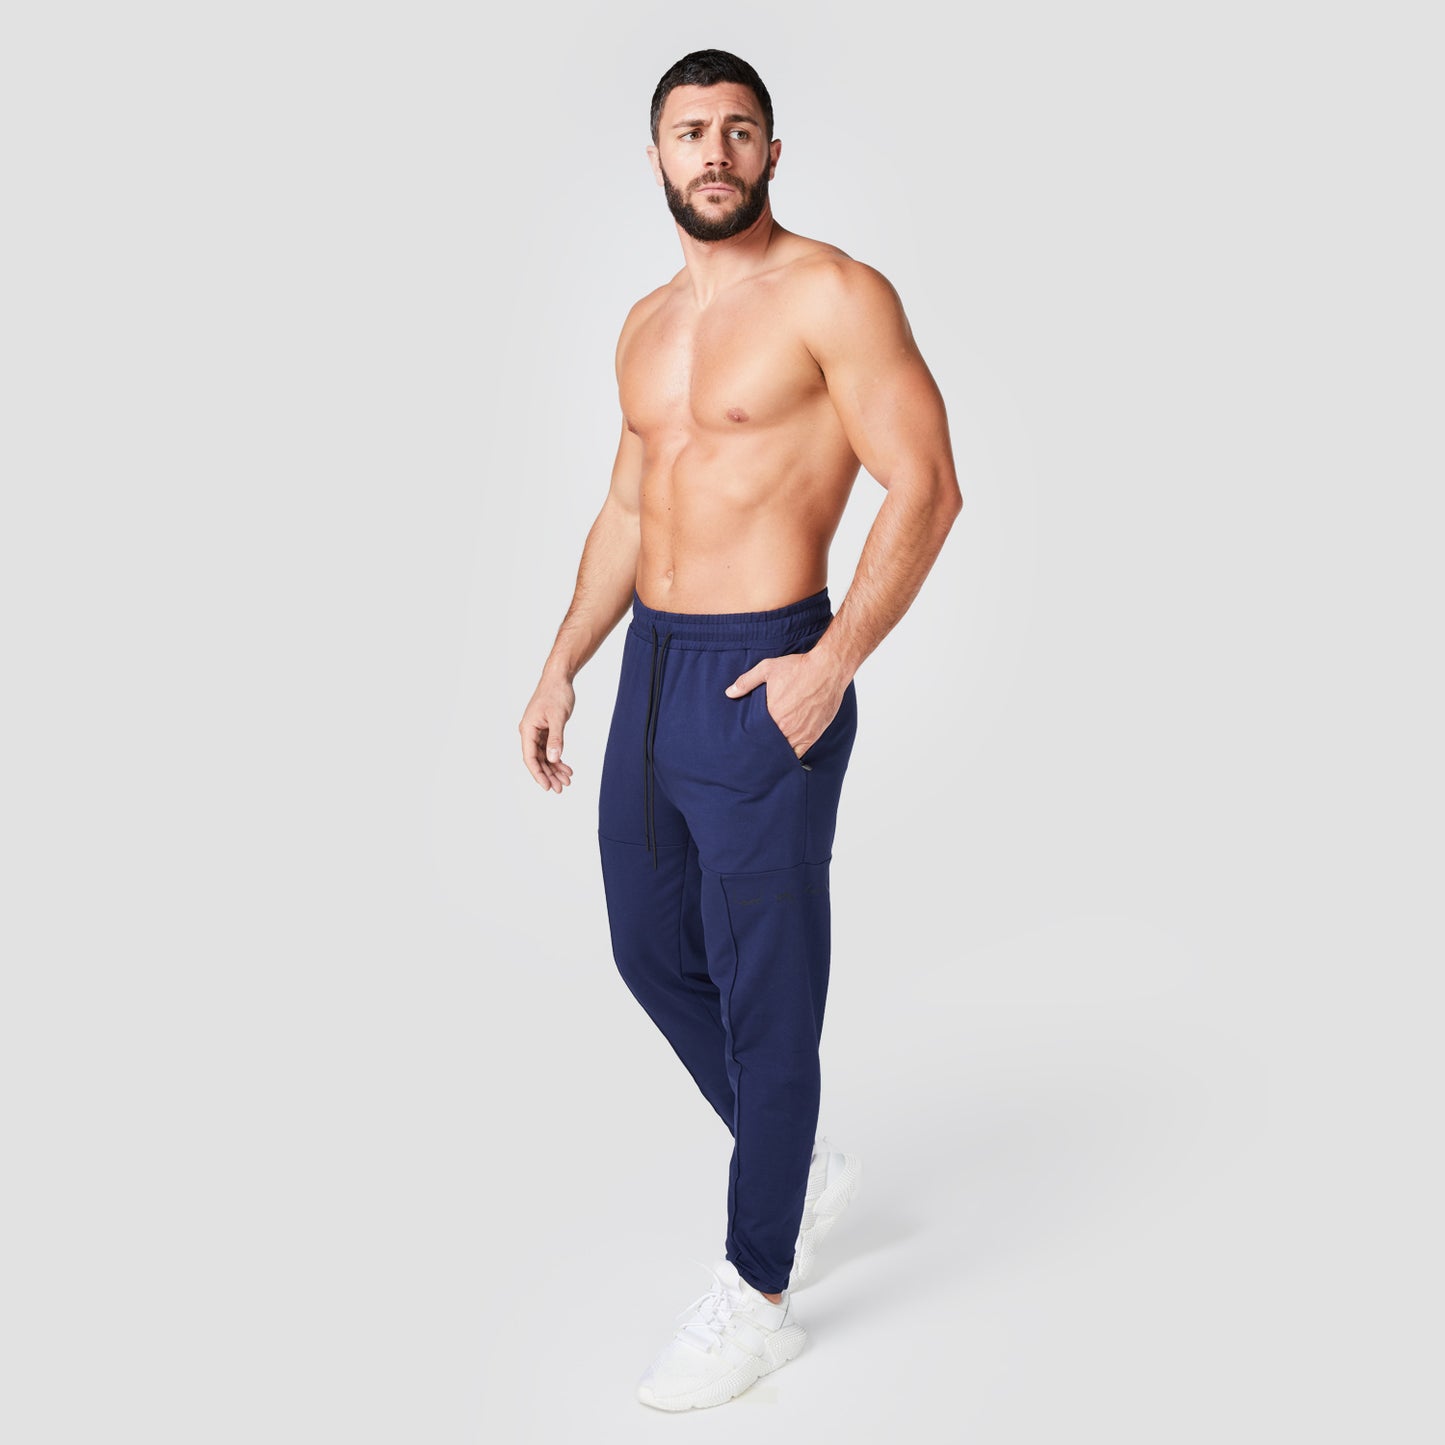 squatwolf-pants-for-men-vibe-jogger-pants-navy-workout-gym-wear